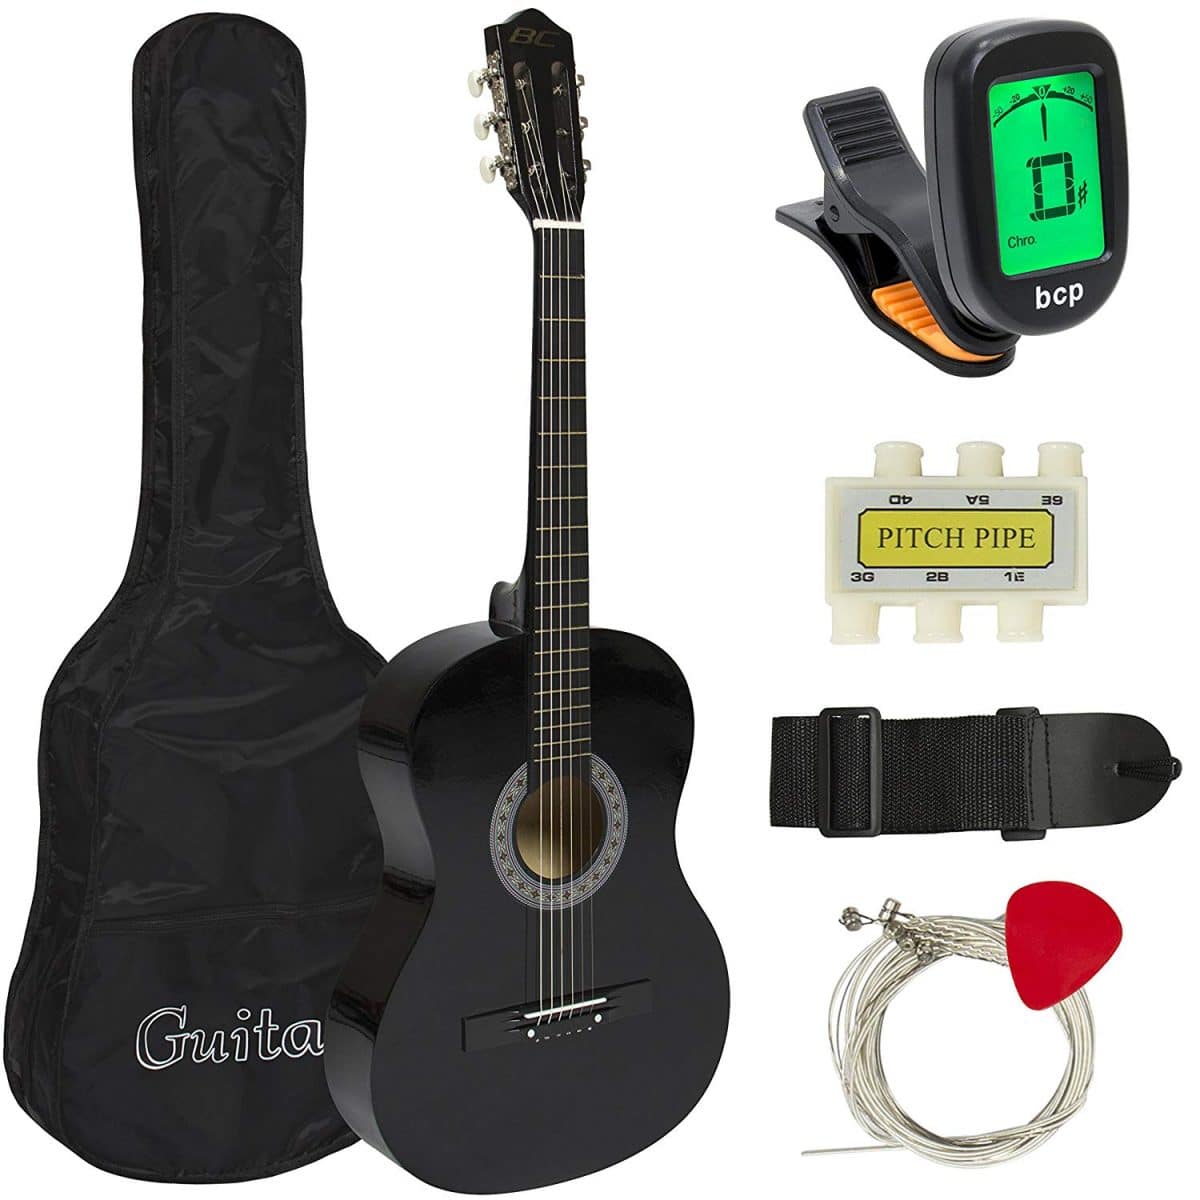 LAGRIMA 38/” Beginner Acoustic Guitar with Guitar Picks String LCD Tuner Pickguard Set and Guitar Bag Pink Basswood Guitar for/ Kids Adult